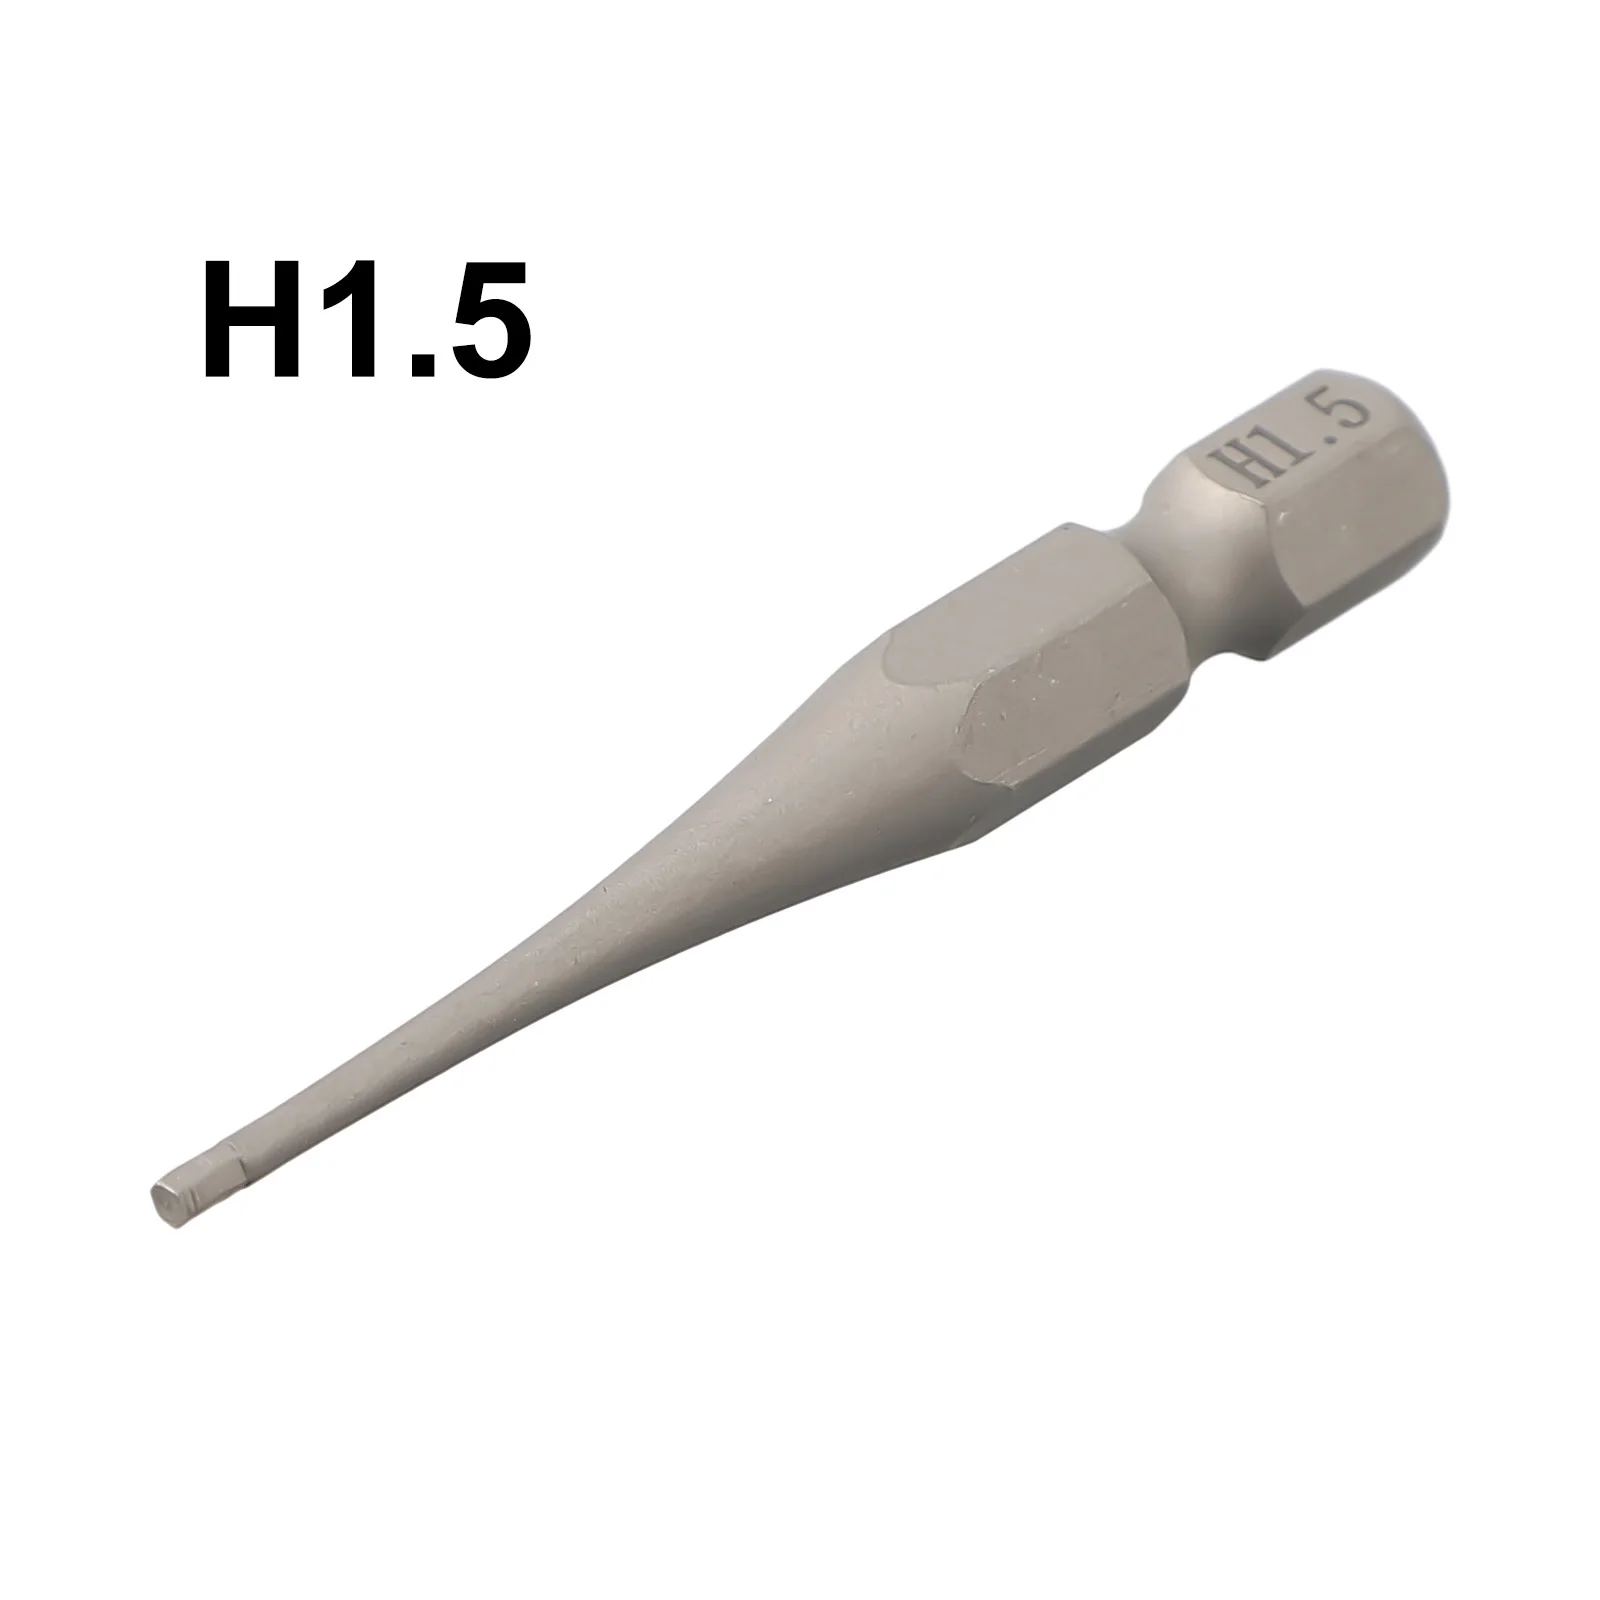 

Bits Screwdriver Bit Magnetic Impact 50mm 1/4 H1.5 H 2 H2.5 H3 H4 H5 H6 Hex Shank Screwdriver Bit No Brand New